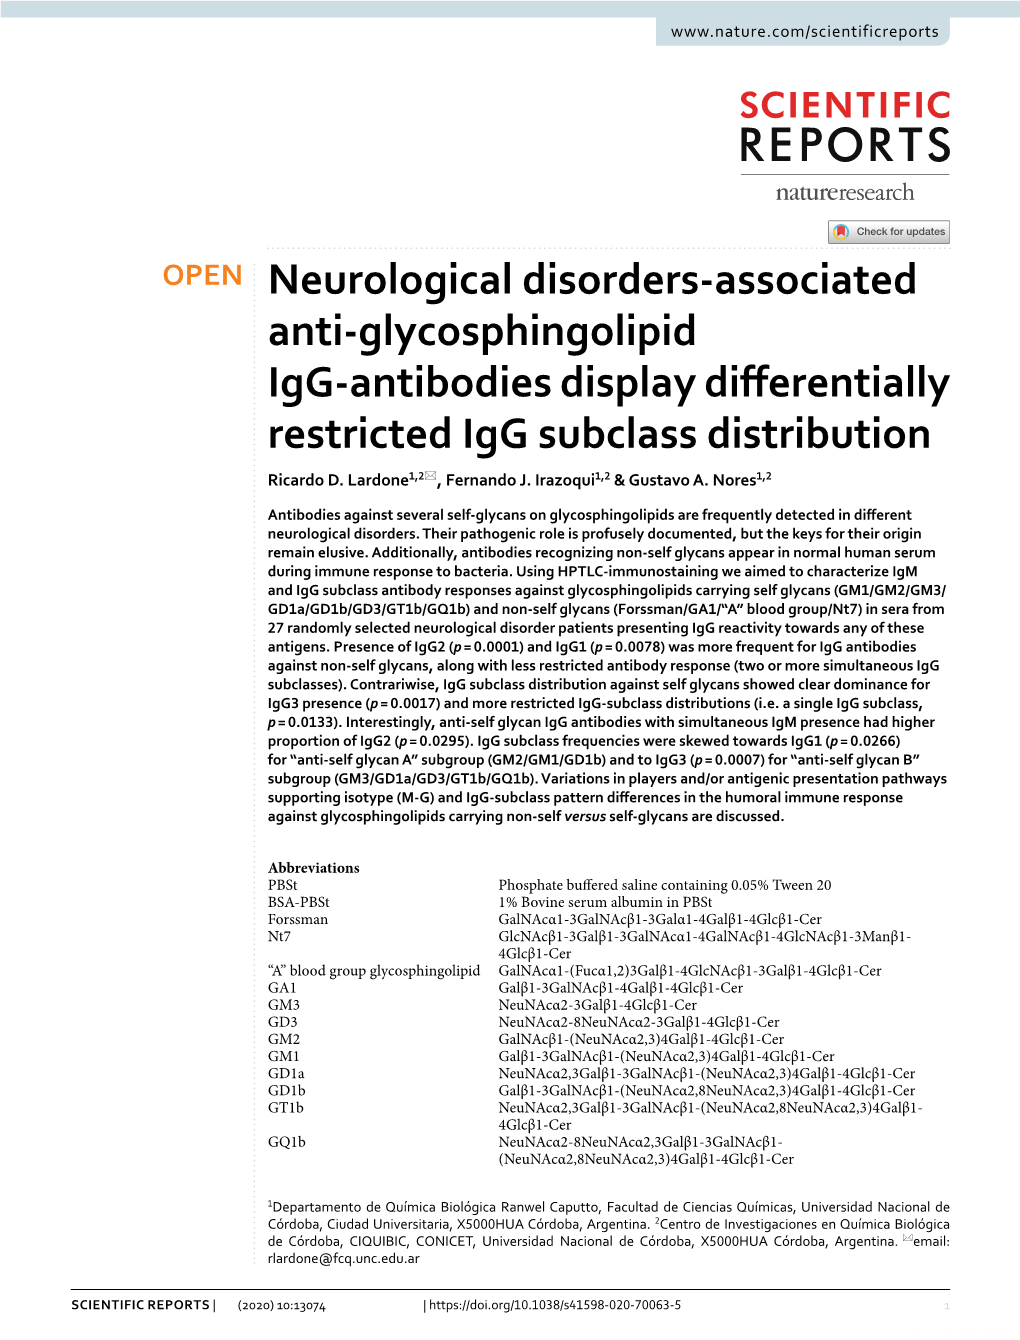 Neurological Disorders-Associated Anti-Glycosphingolipid Igg